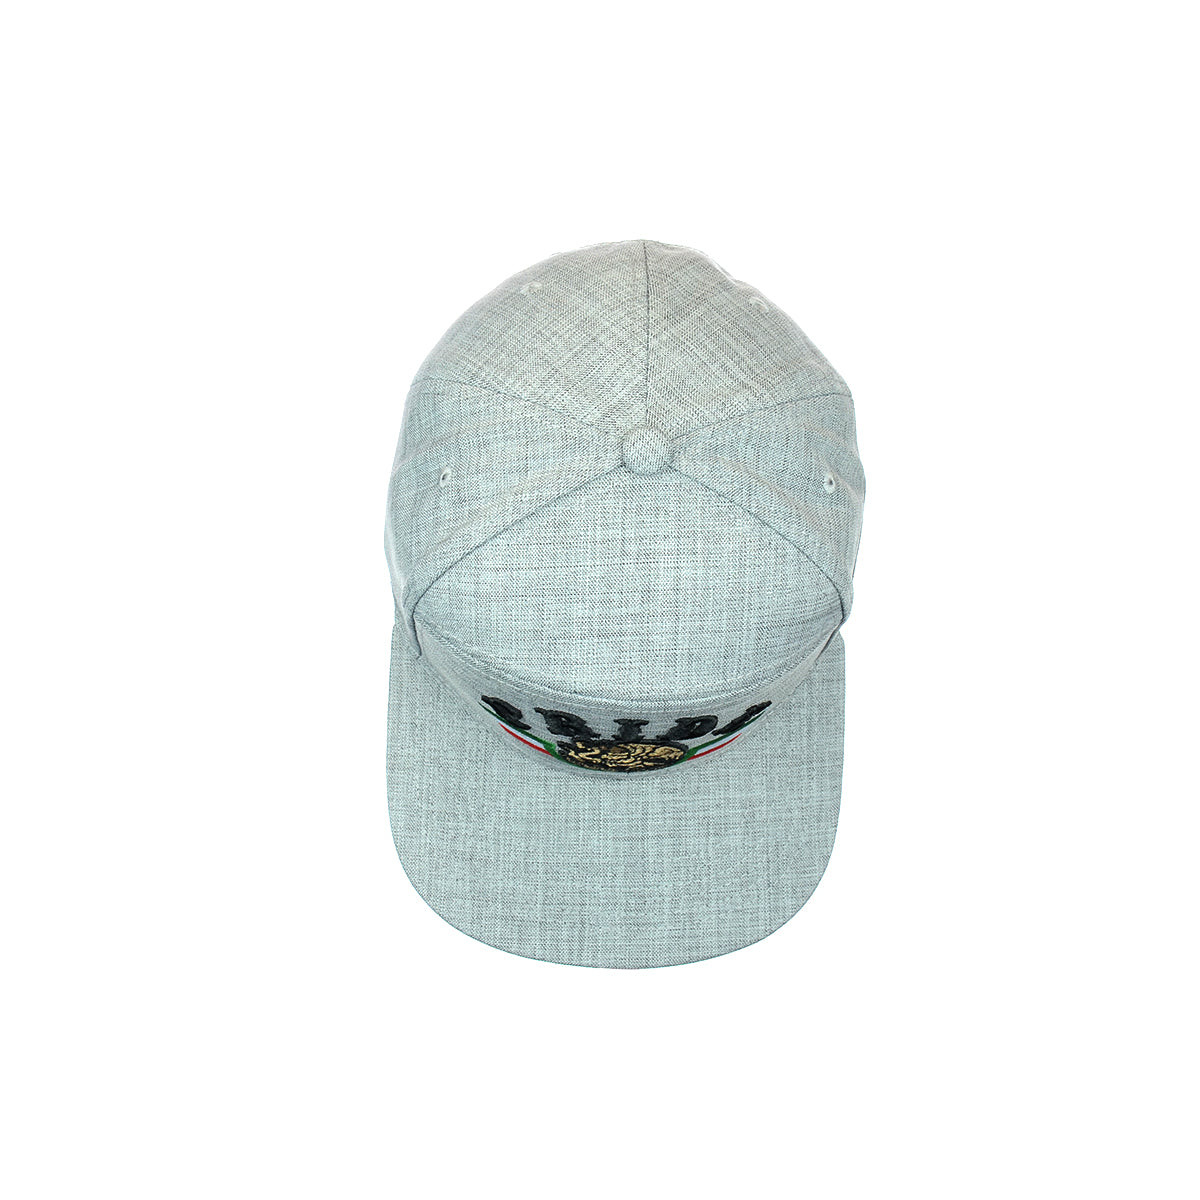 Snapback "PRIDE" Hat Embroidered